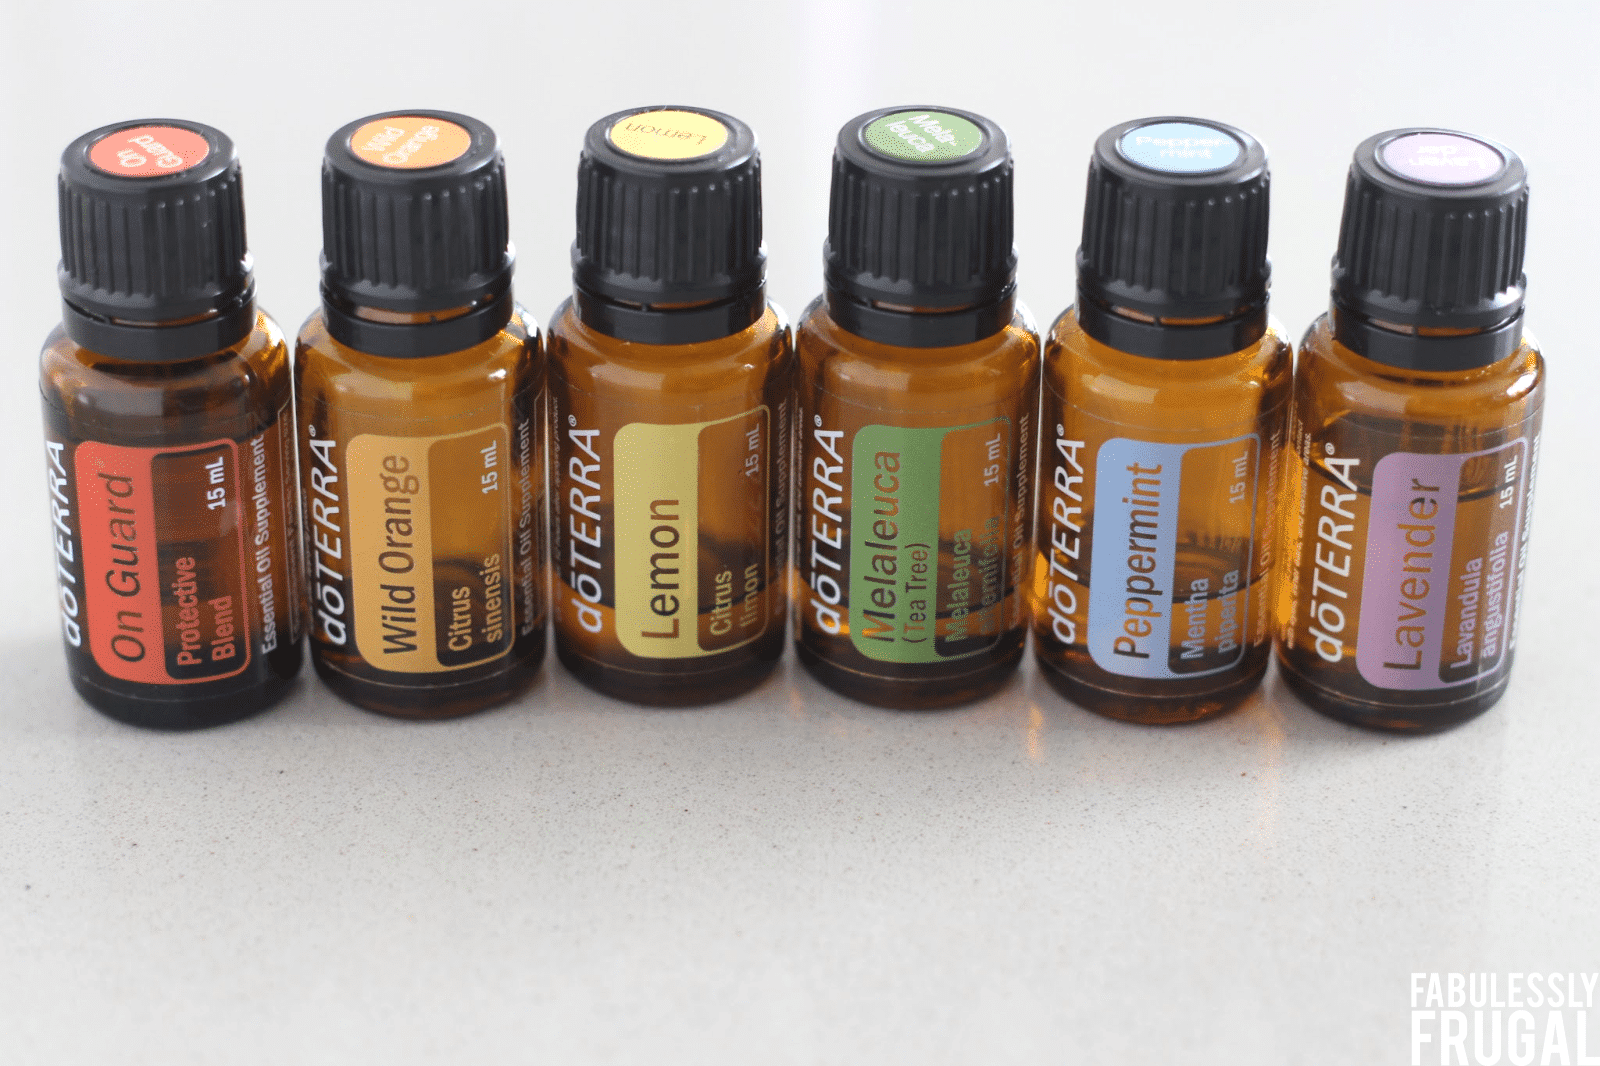 6 doTERRA essential oils